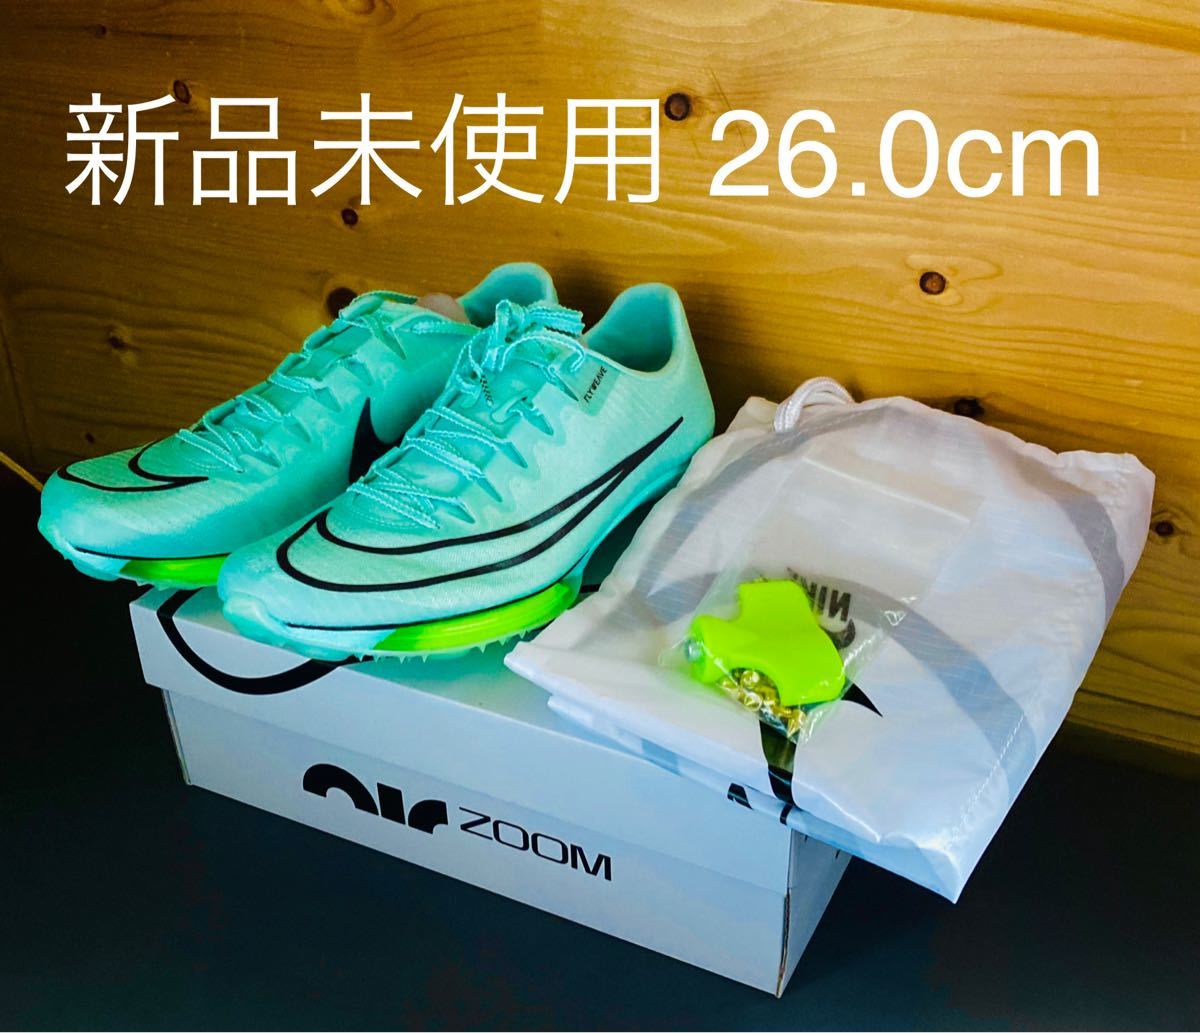 Nike Air zoom maxfly 26.0cm | itakt.no